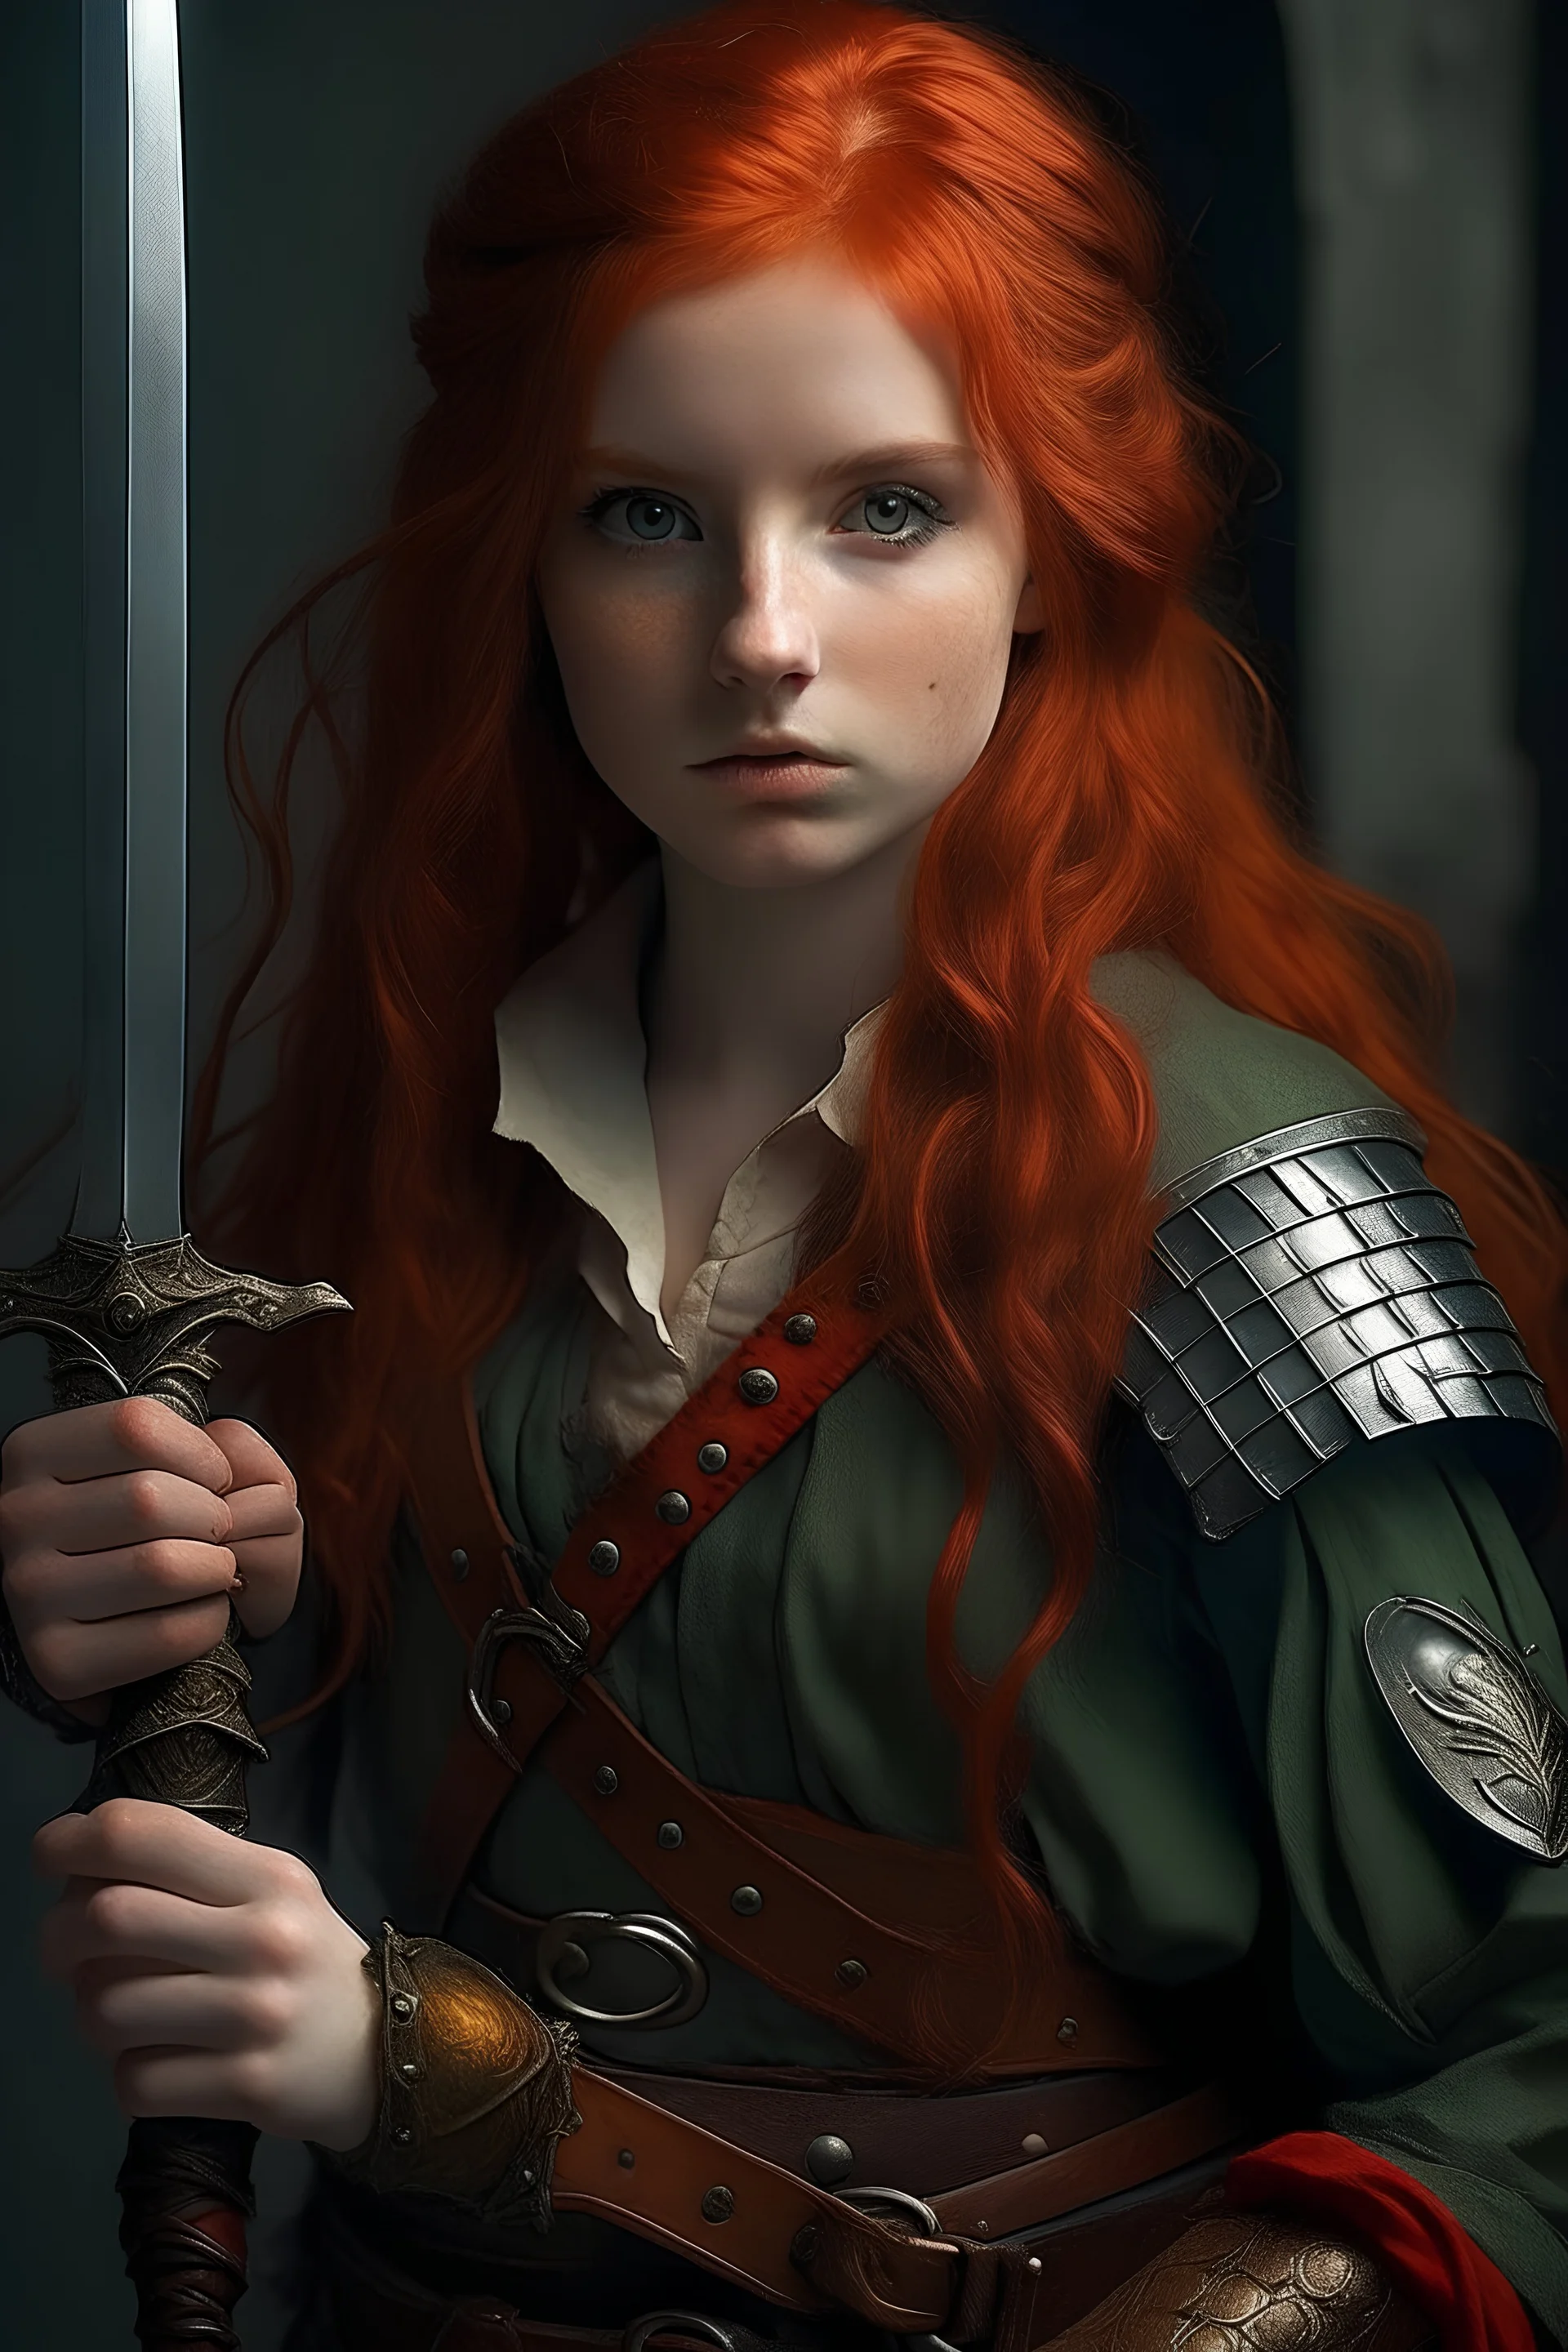 Human, 19yo girl, redhair, medieval, fantasy, jestet suit, belt with dagger